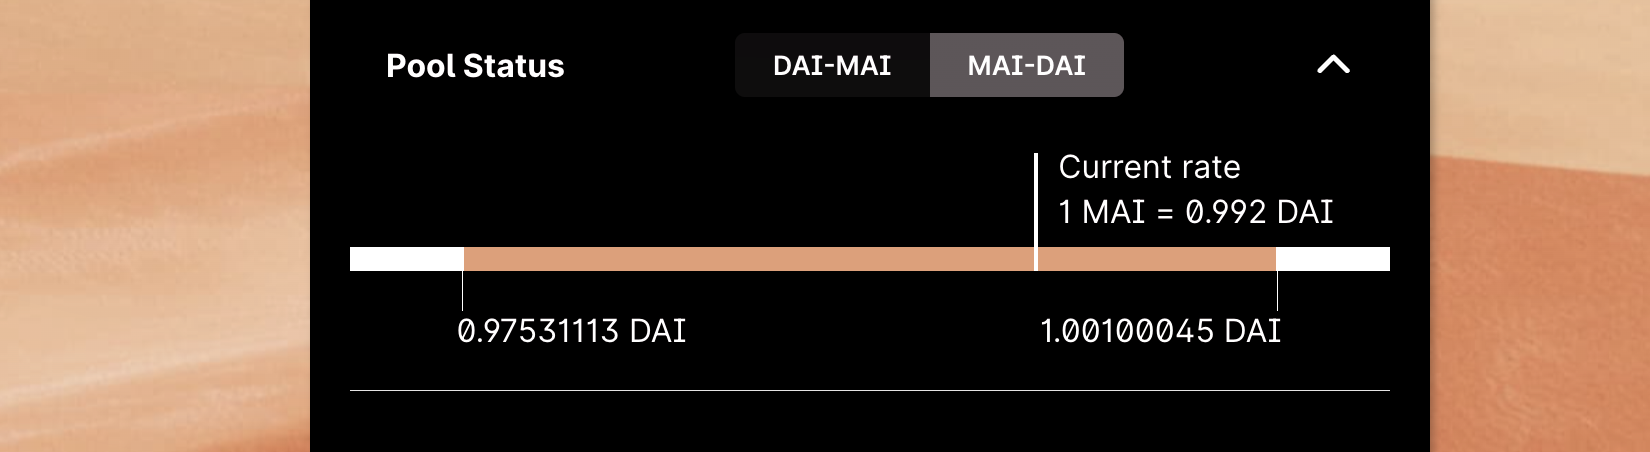 MAI-DAI initial trading range